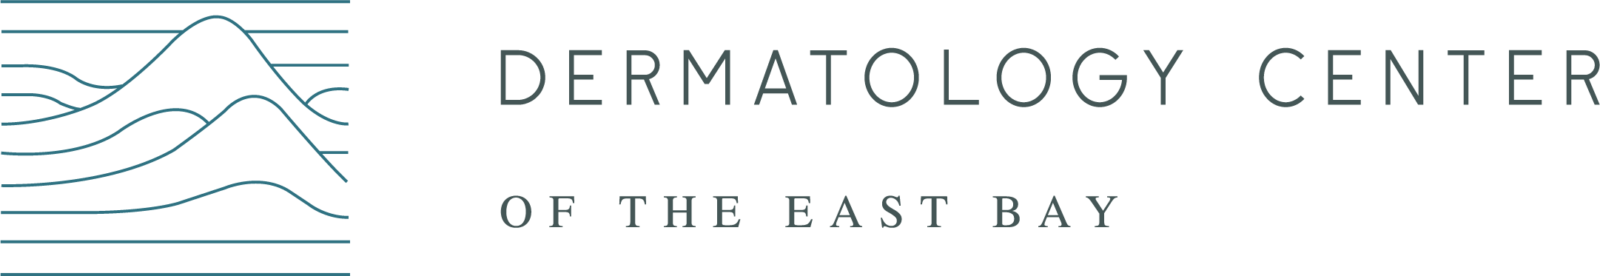 dermatology center of the east bay logo